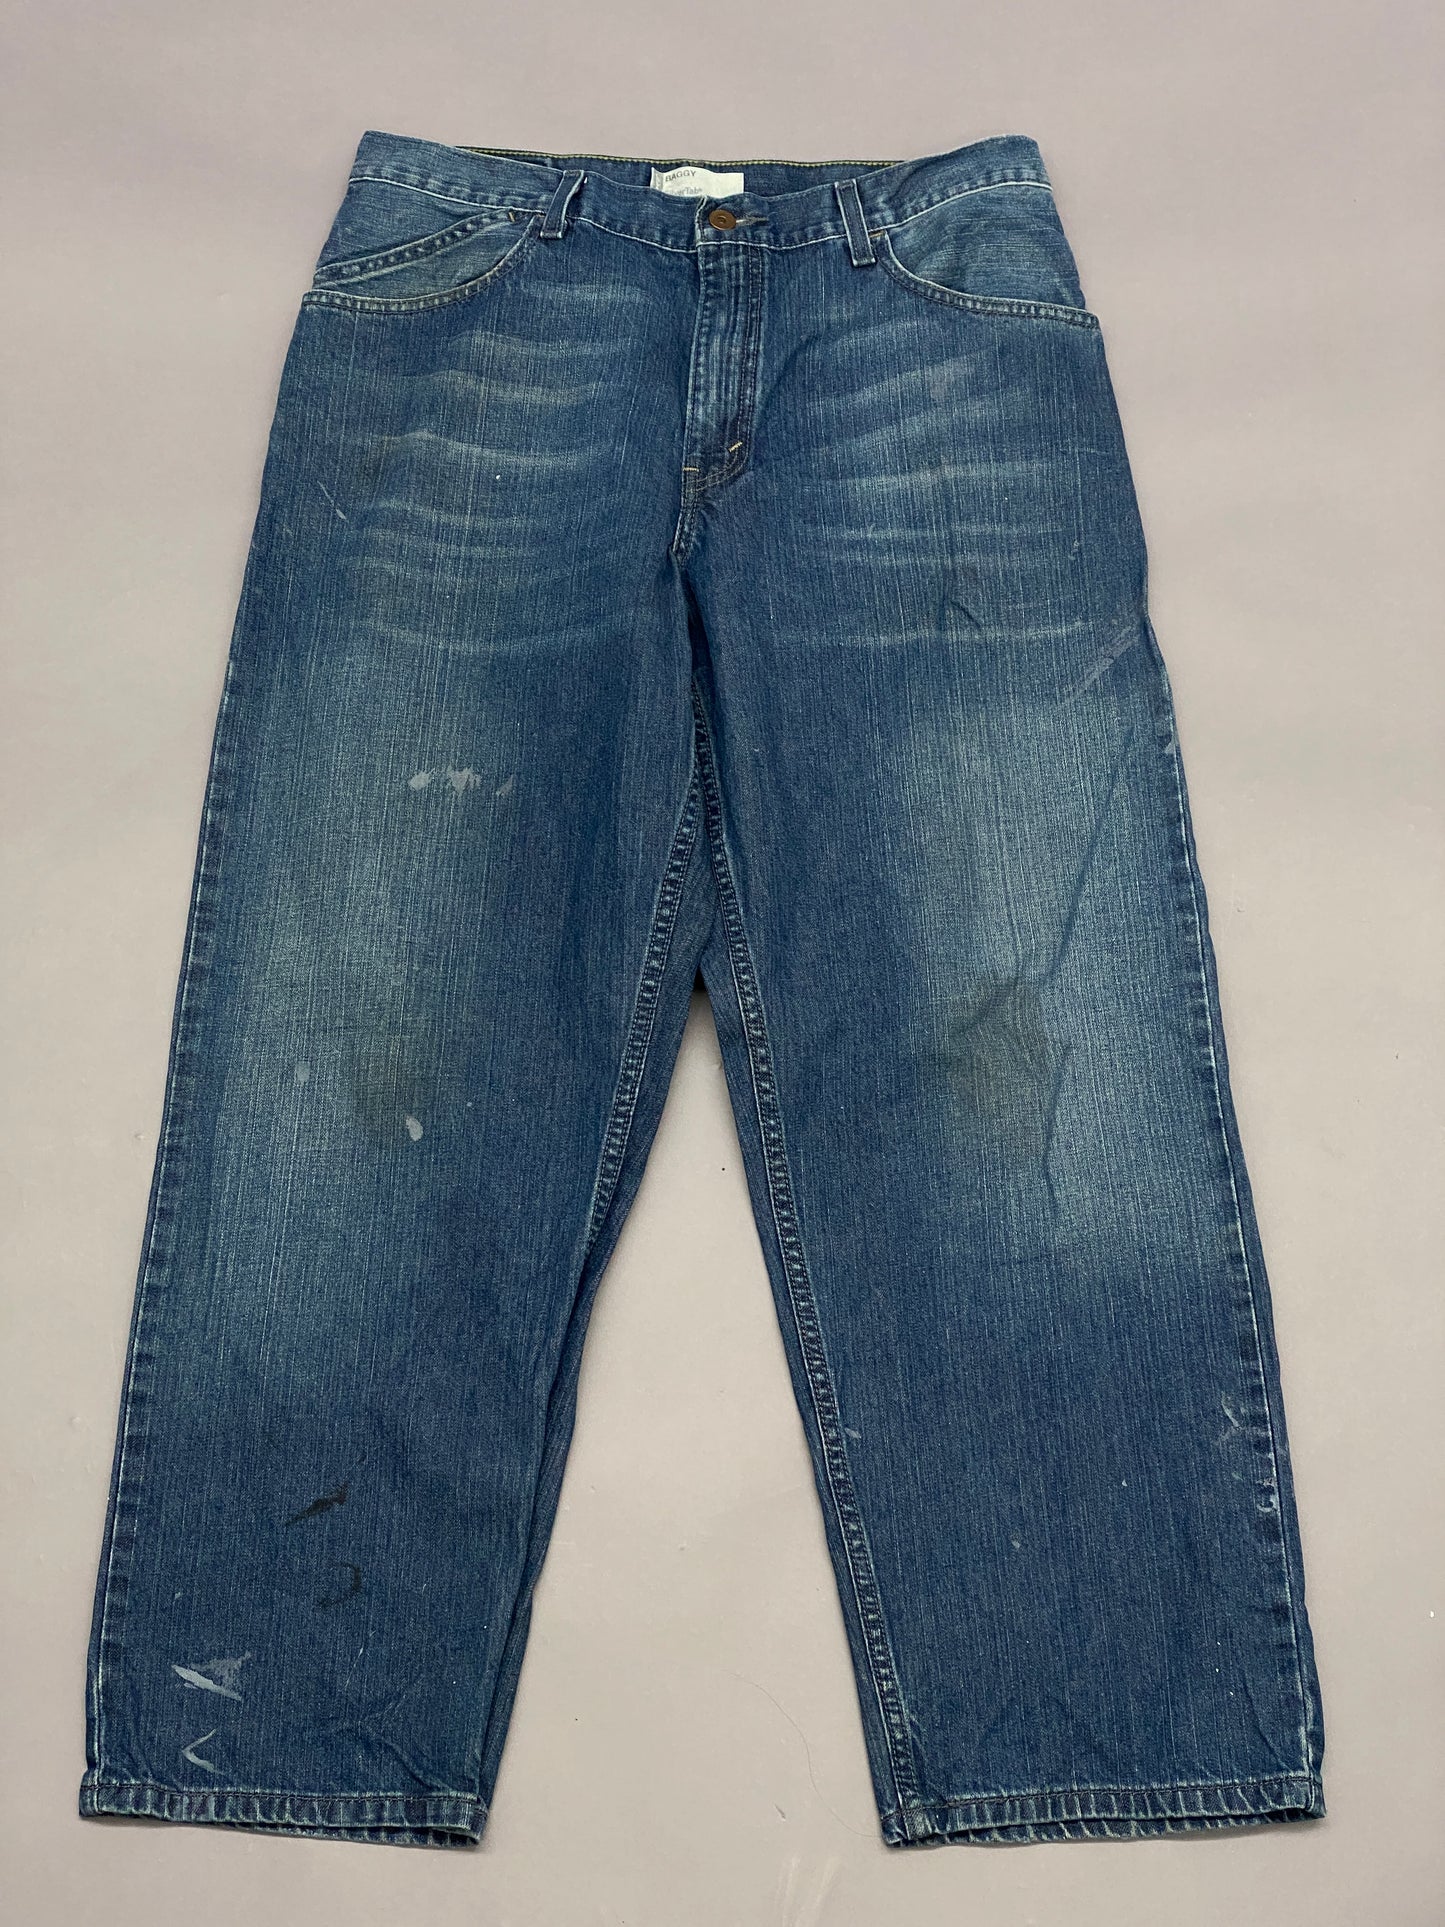 Jeans Levis Silver Tab Baggy Vintage - 34 x 30